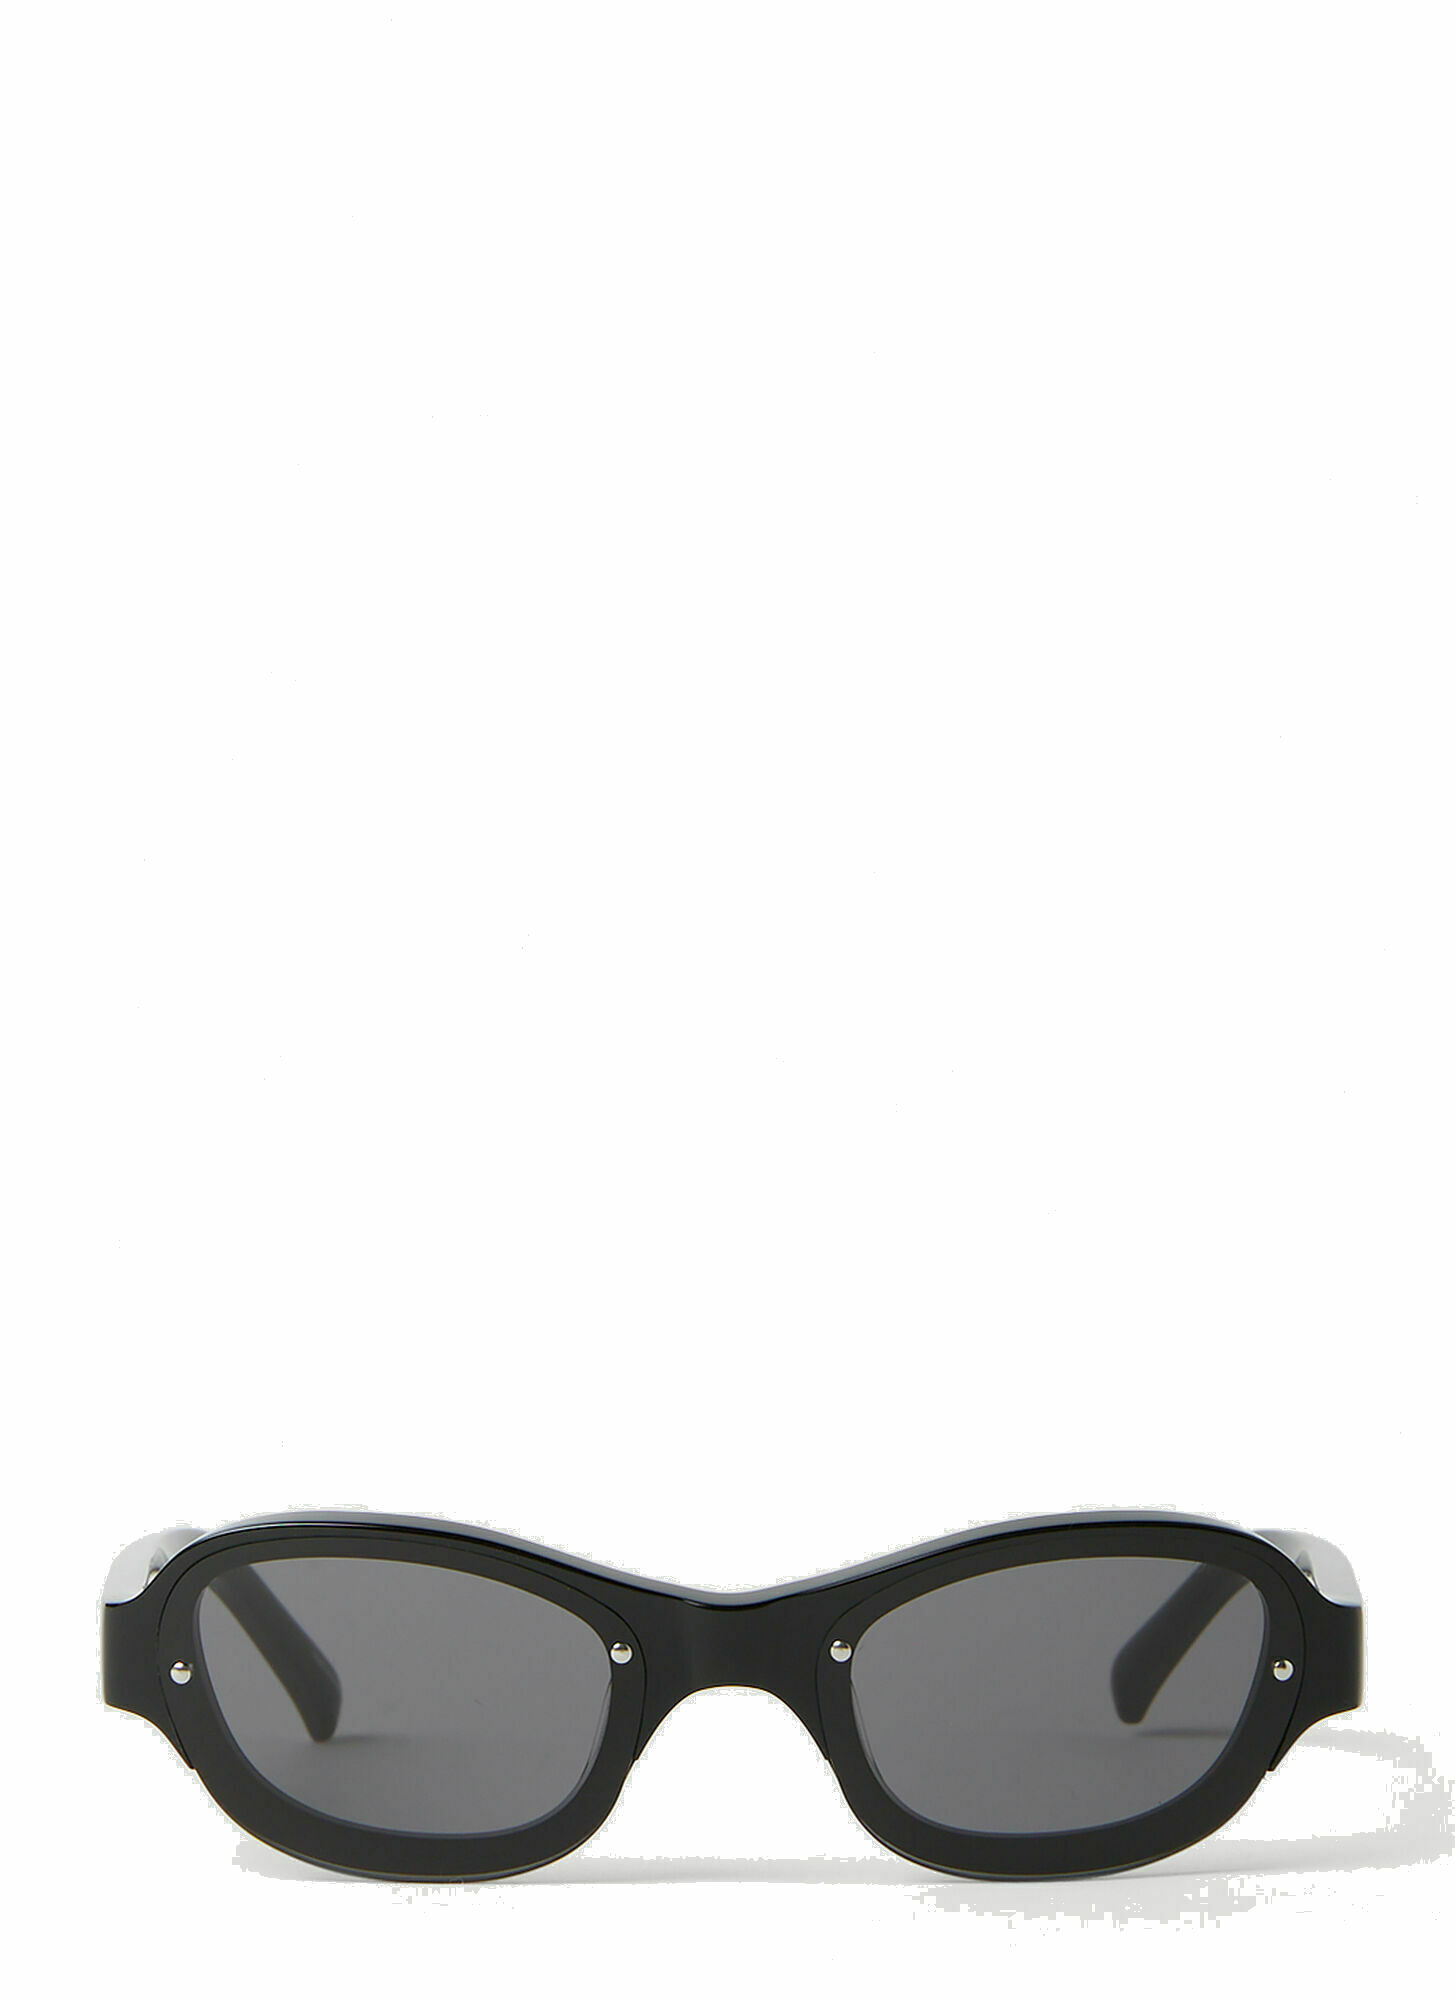 Skye Sunglasses in Black A BETTER FEELING